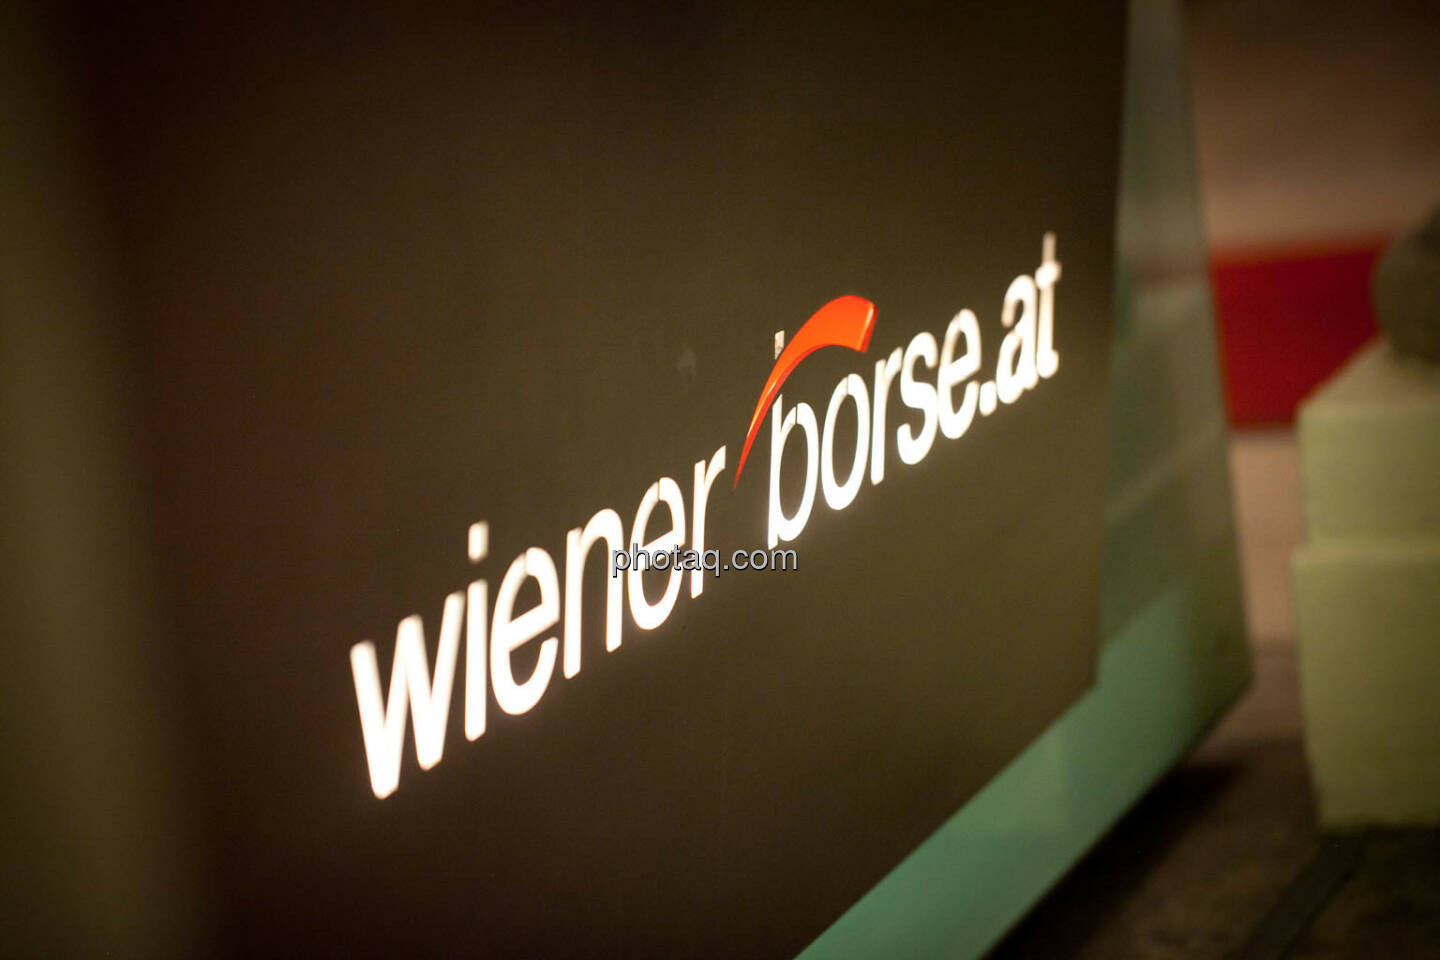 Wiener Börse